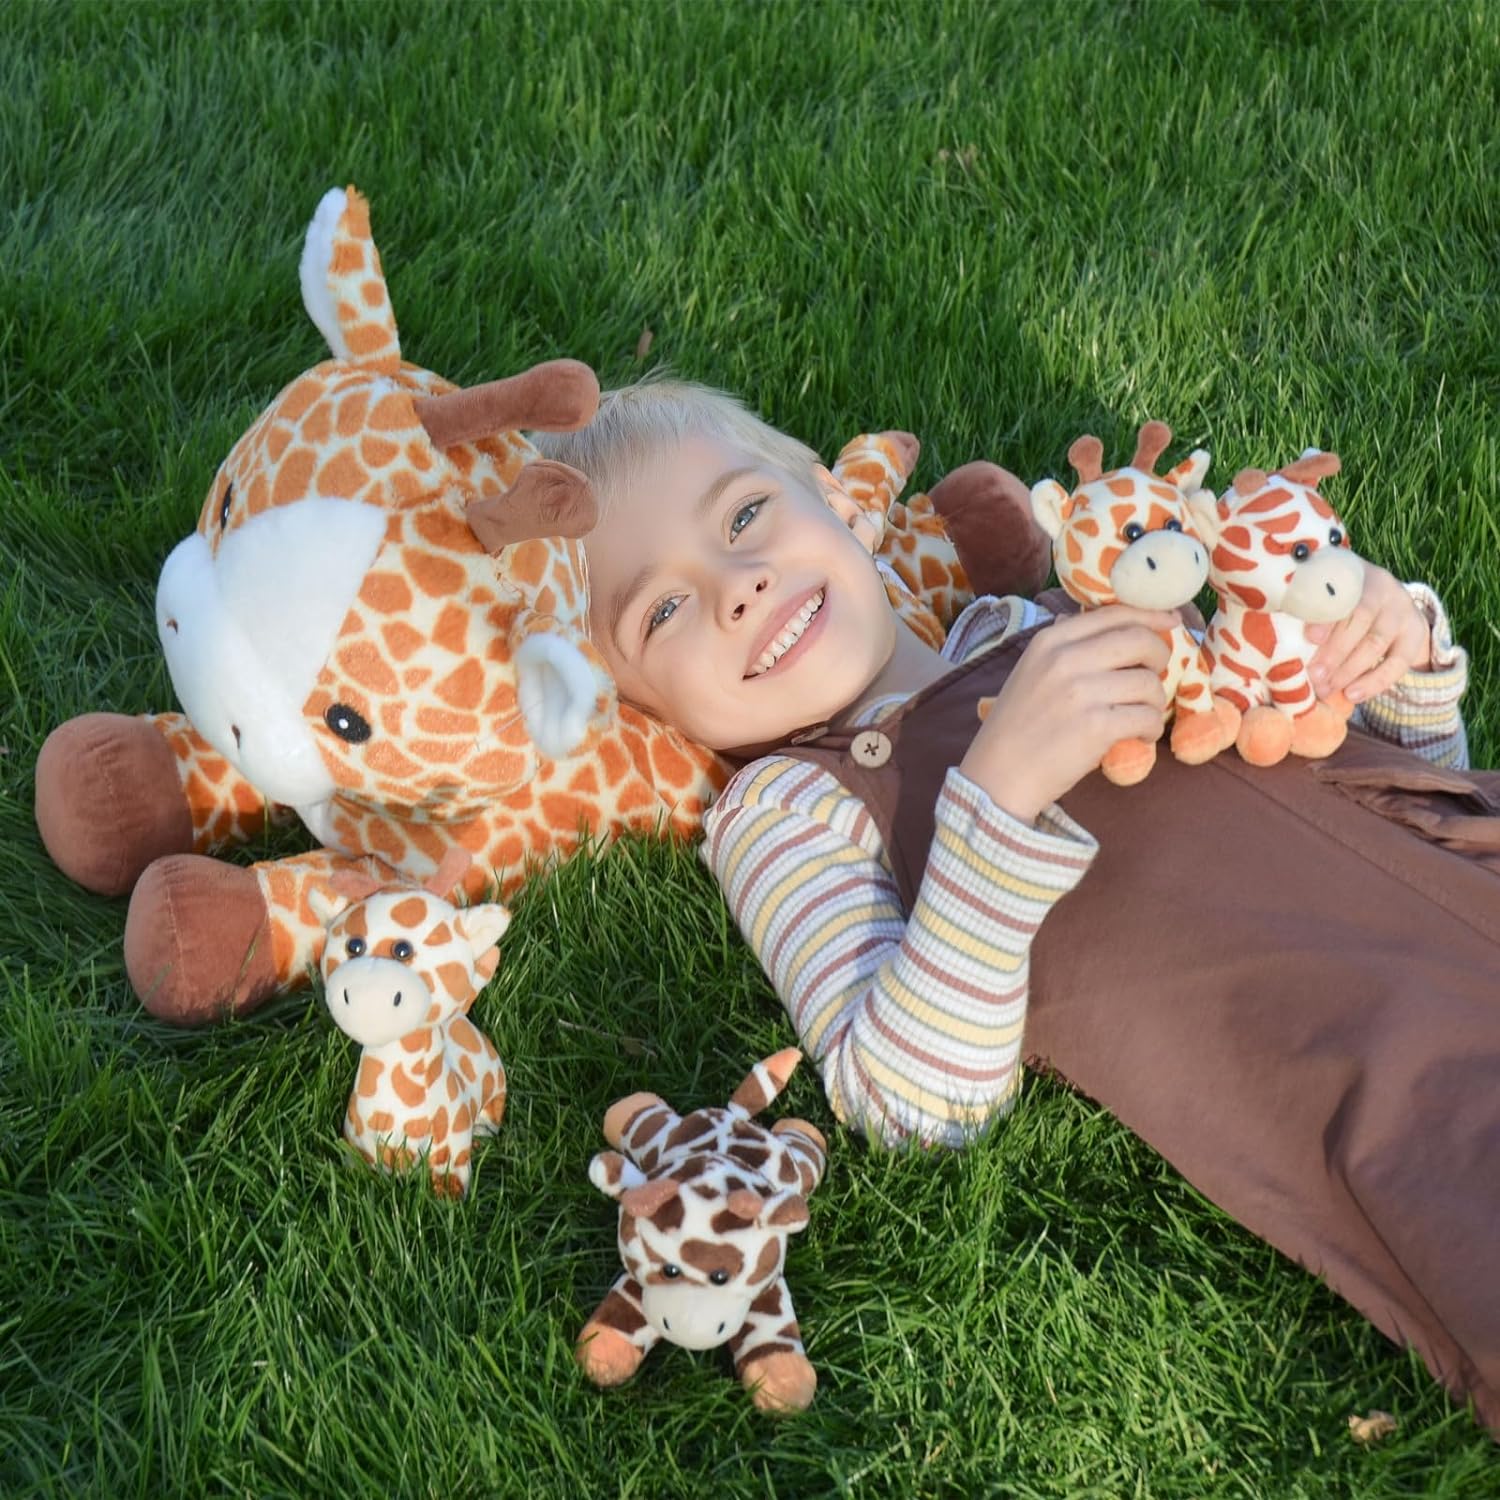 Giraffe Plush Toys Jungle Stuffed Animals, 22 Inches